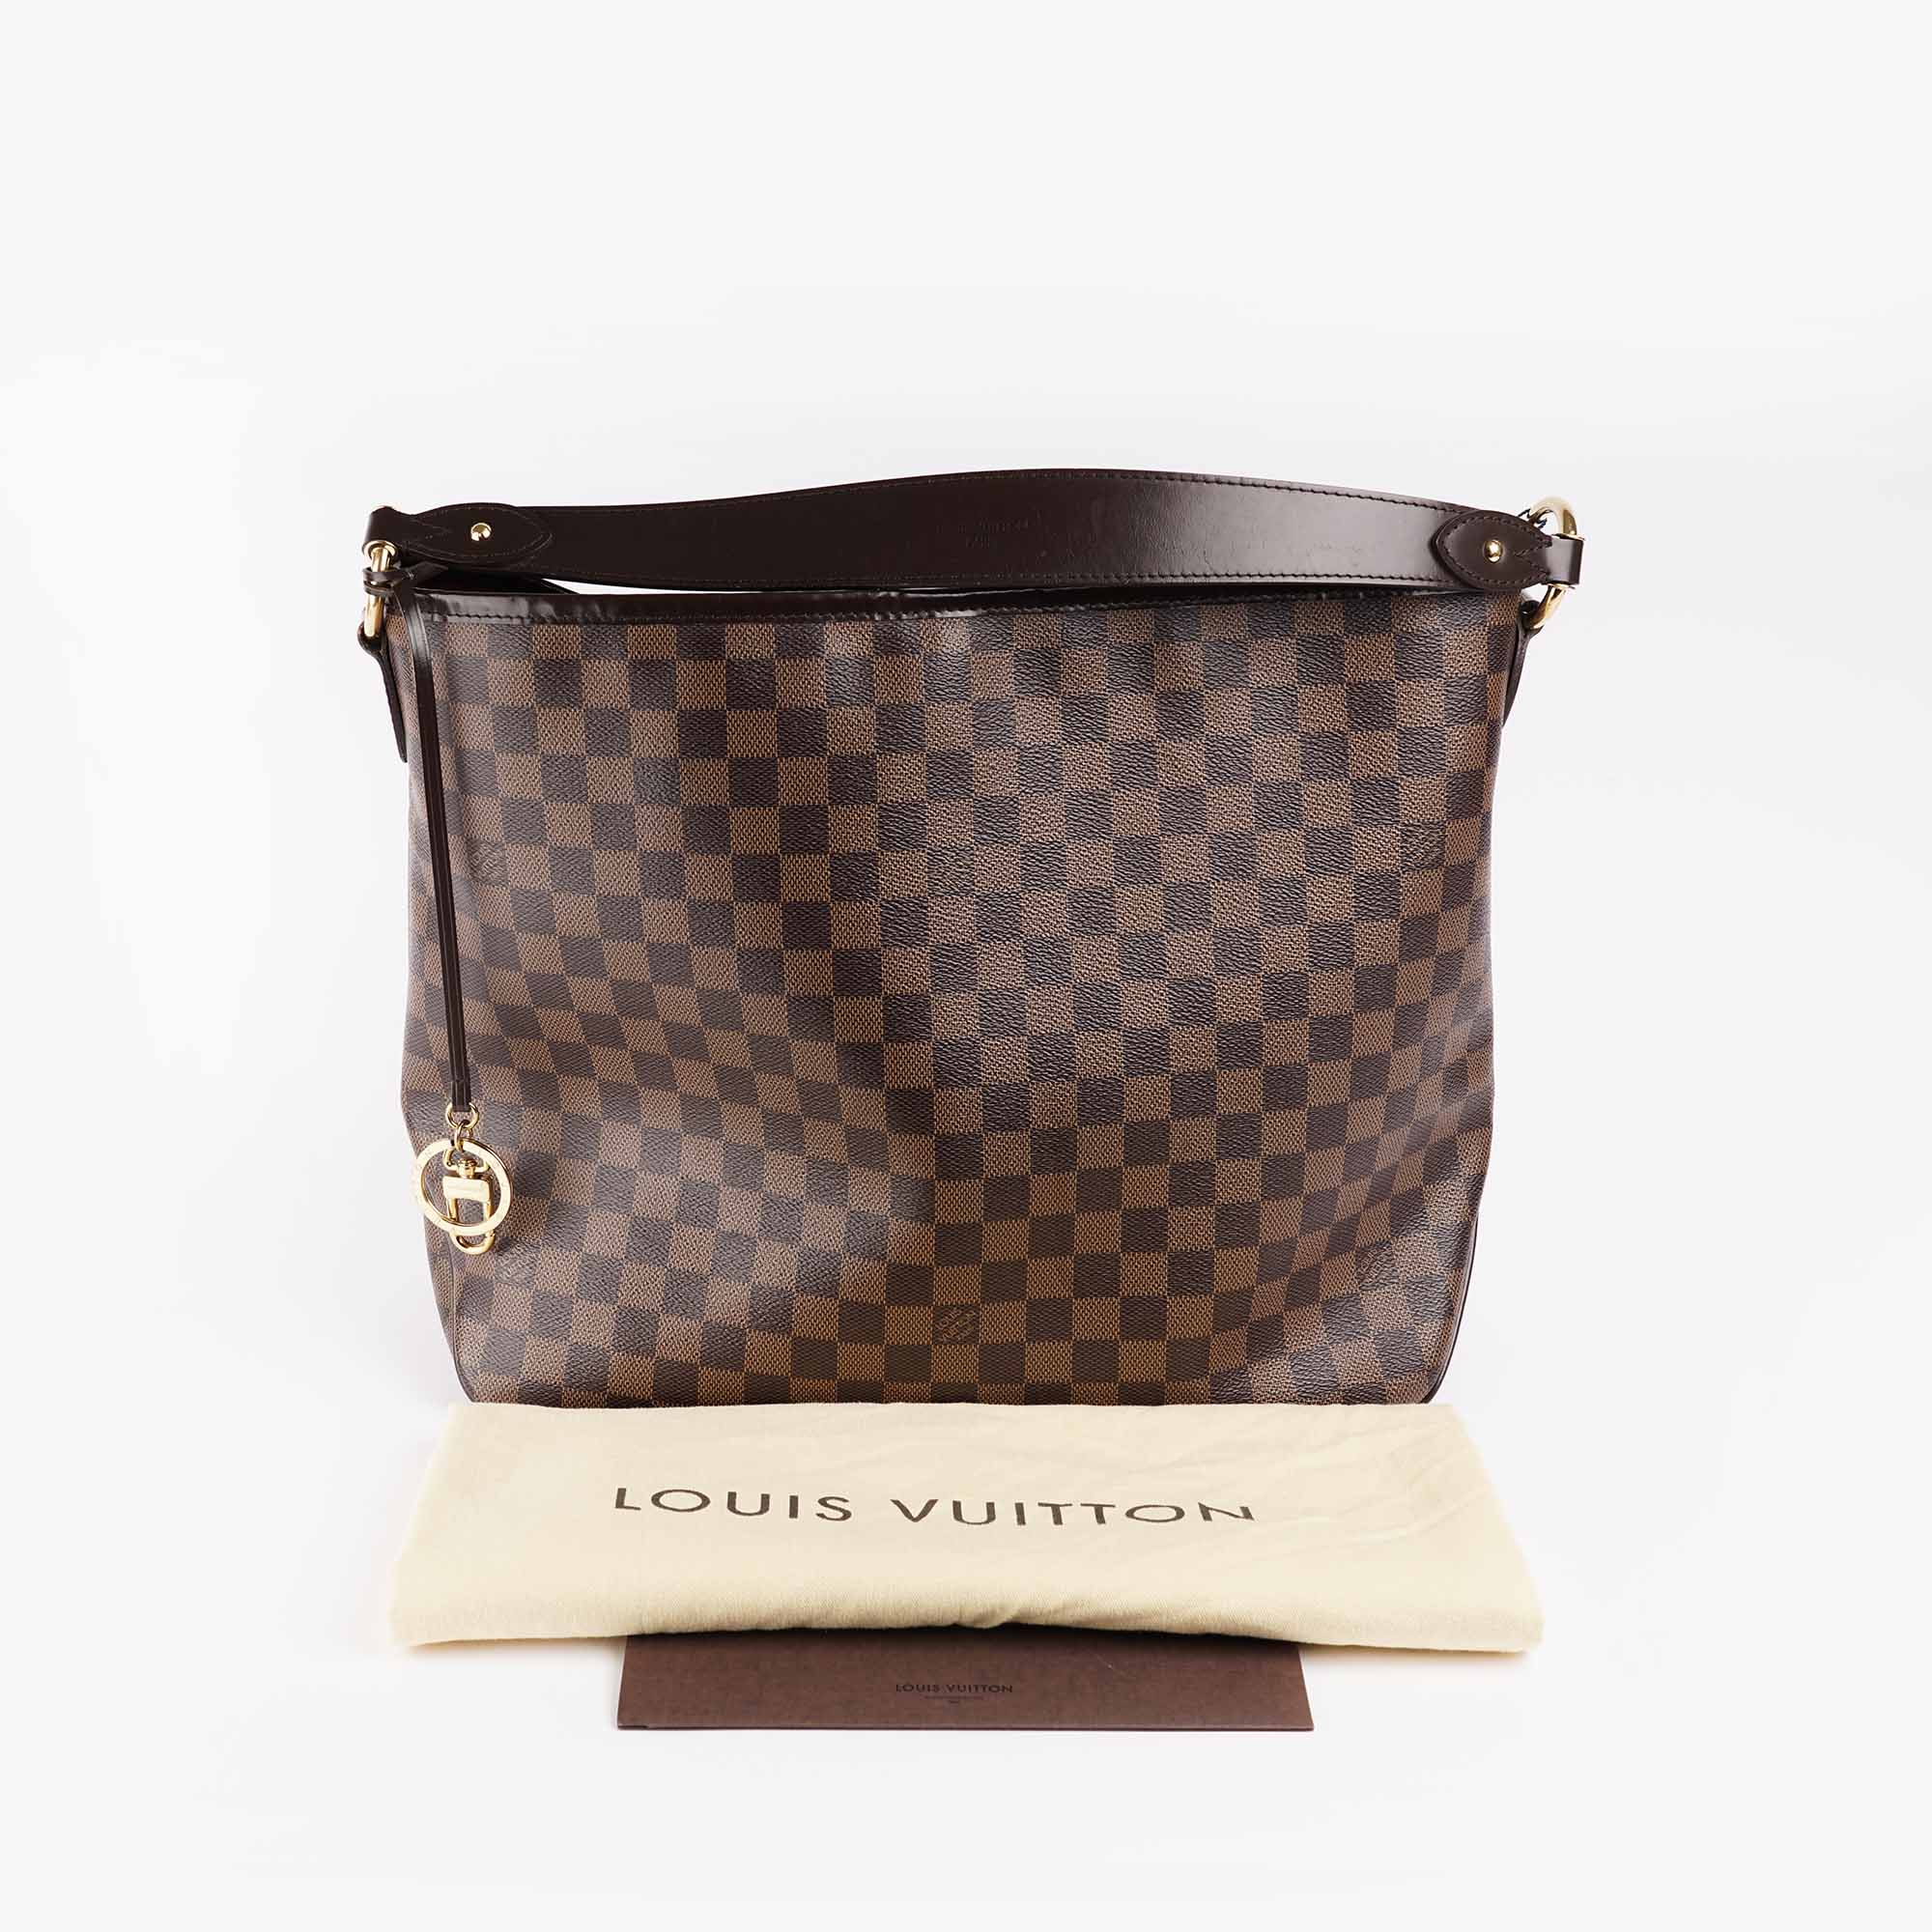 Delightful MM Shoulder Bag - LOUIS VUITTON - Affordable Luxury image